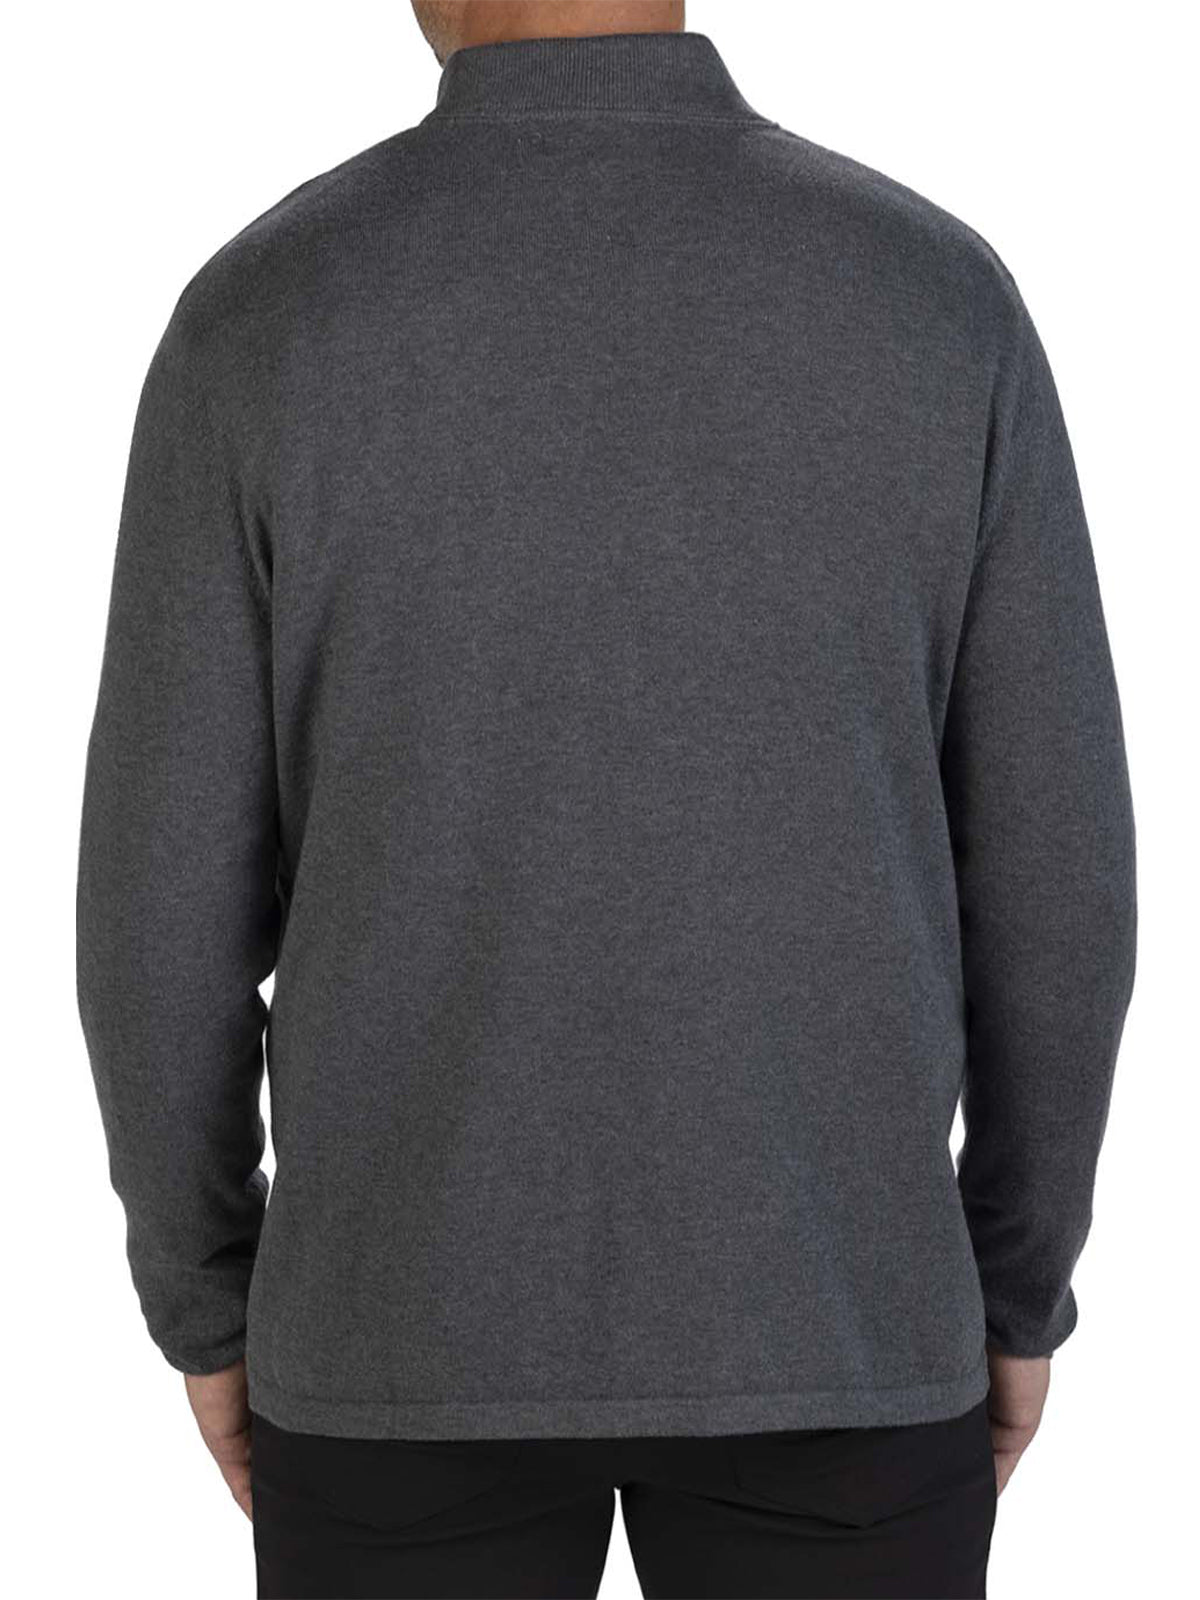 Unisex Quarter-Zip Sweater - 4072 - Smoke Heather